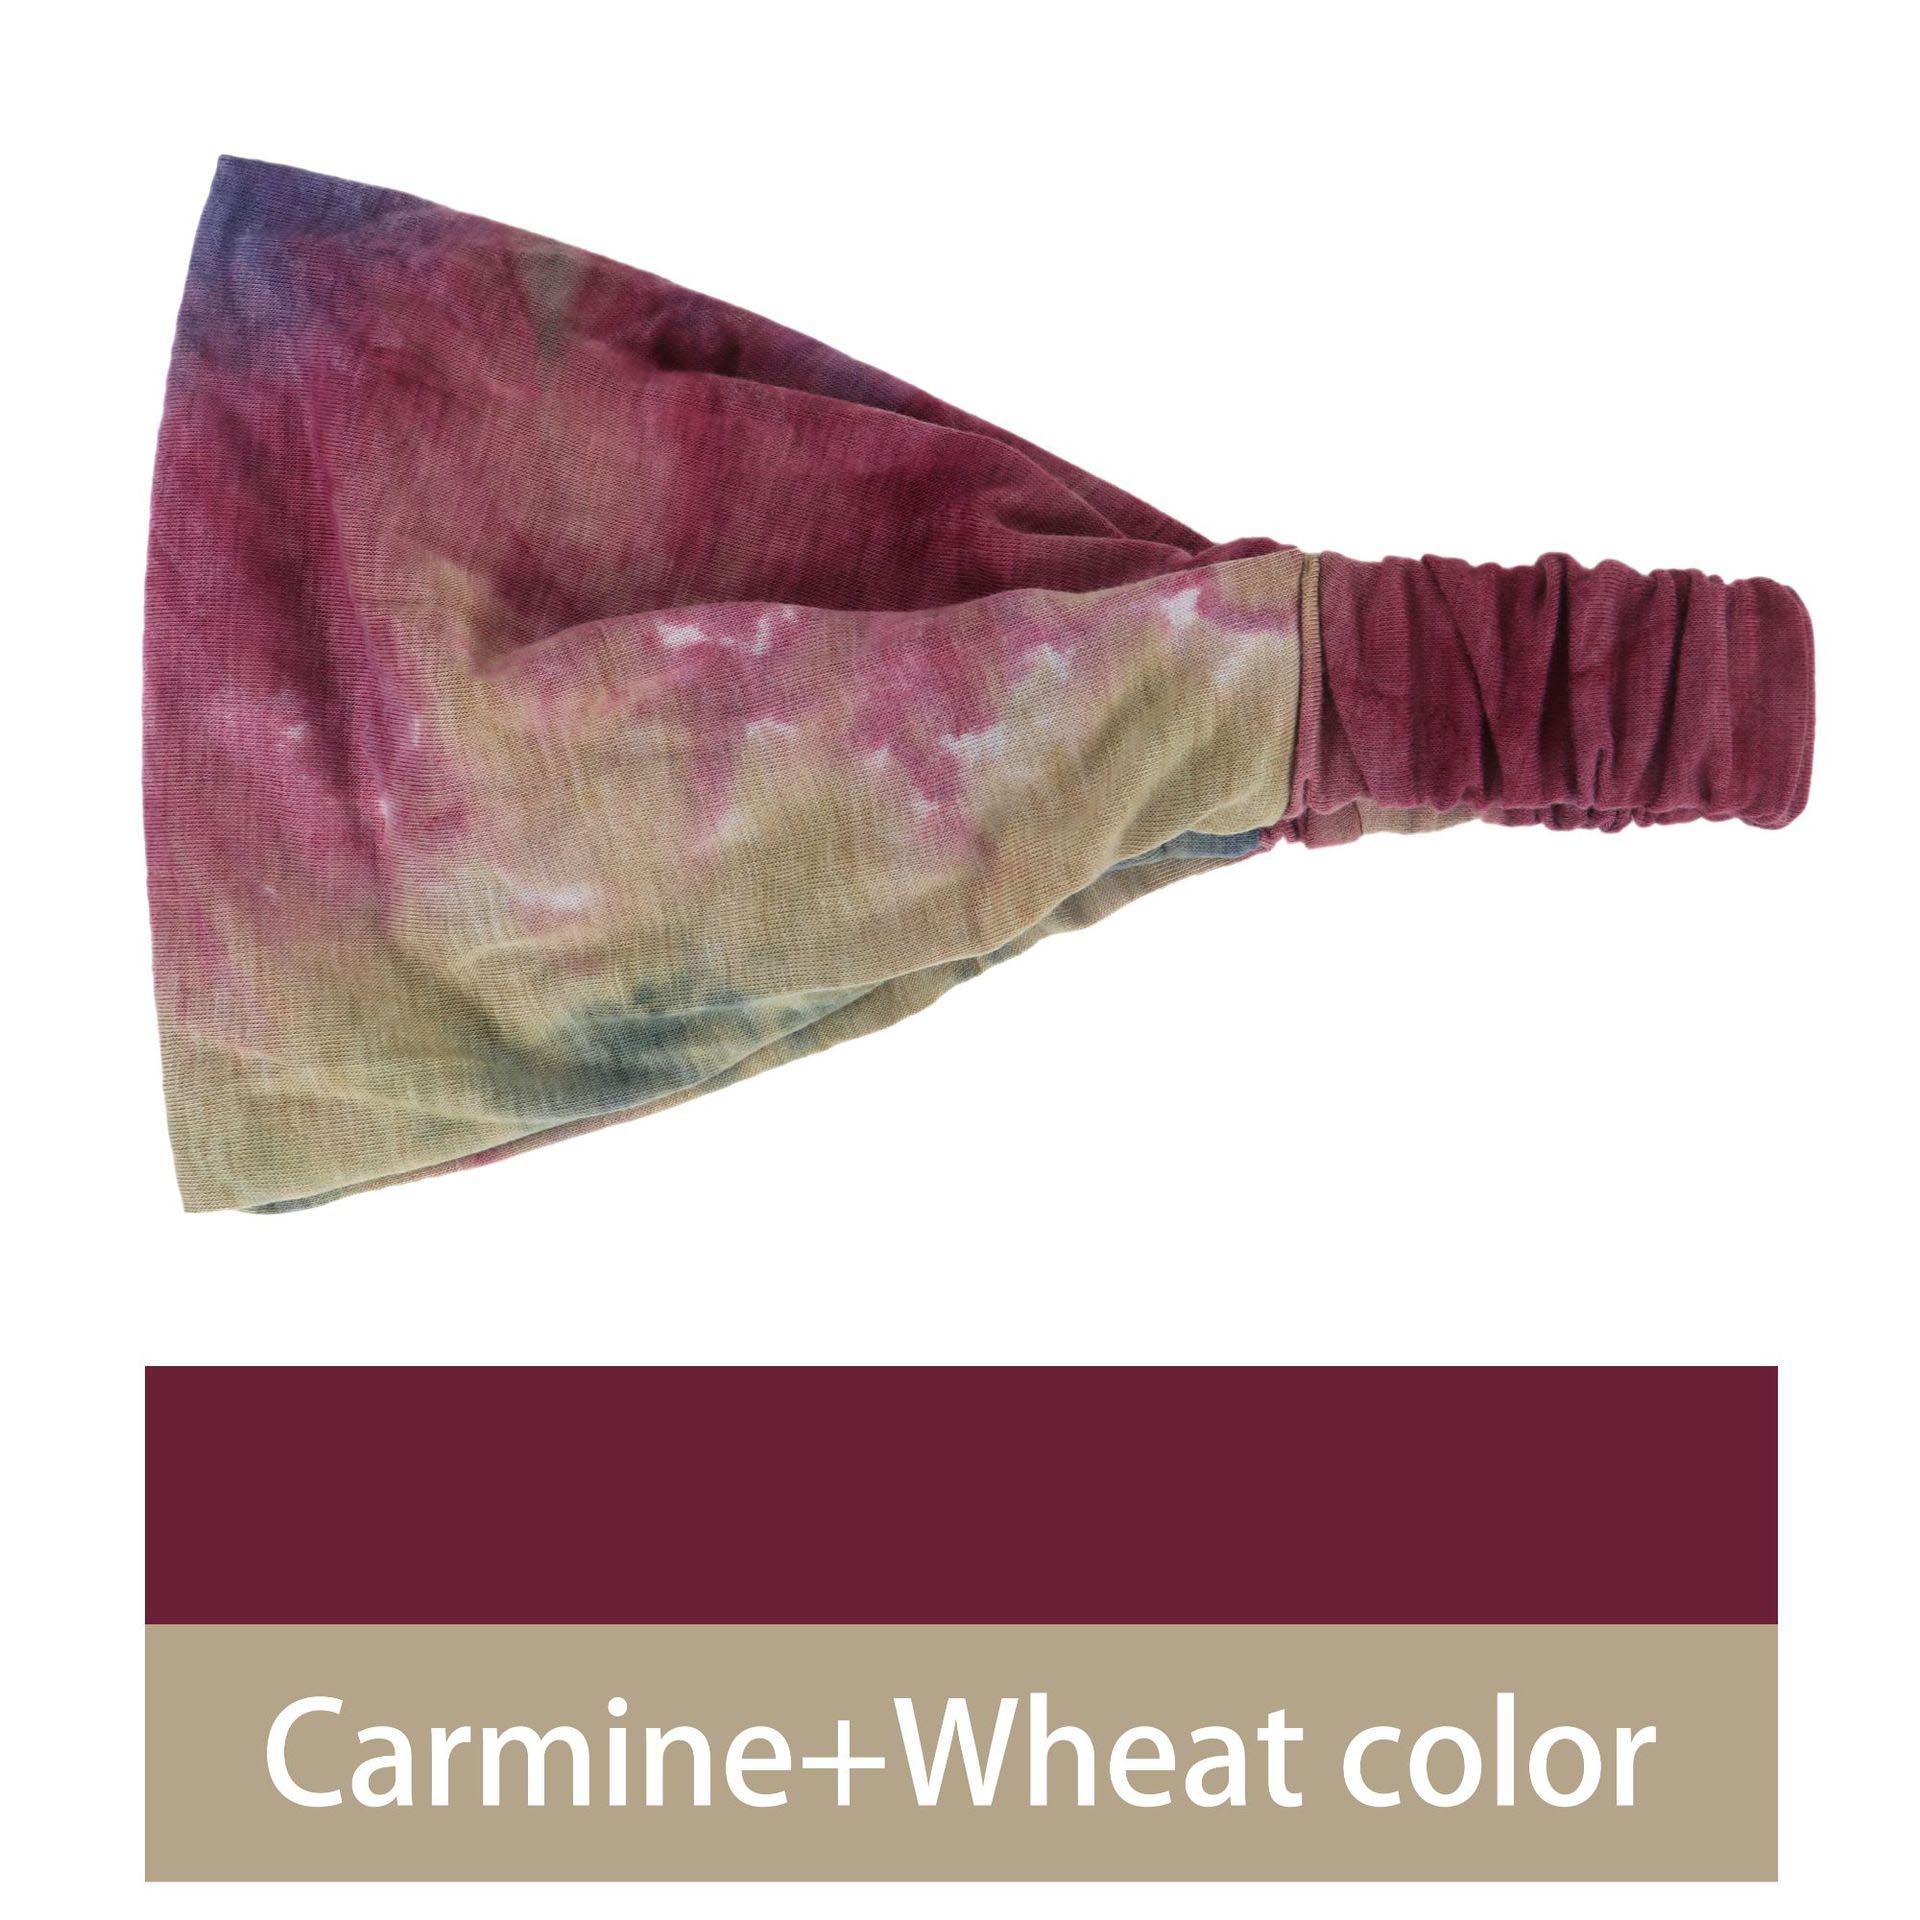 Carmine and wheat color